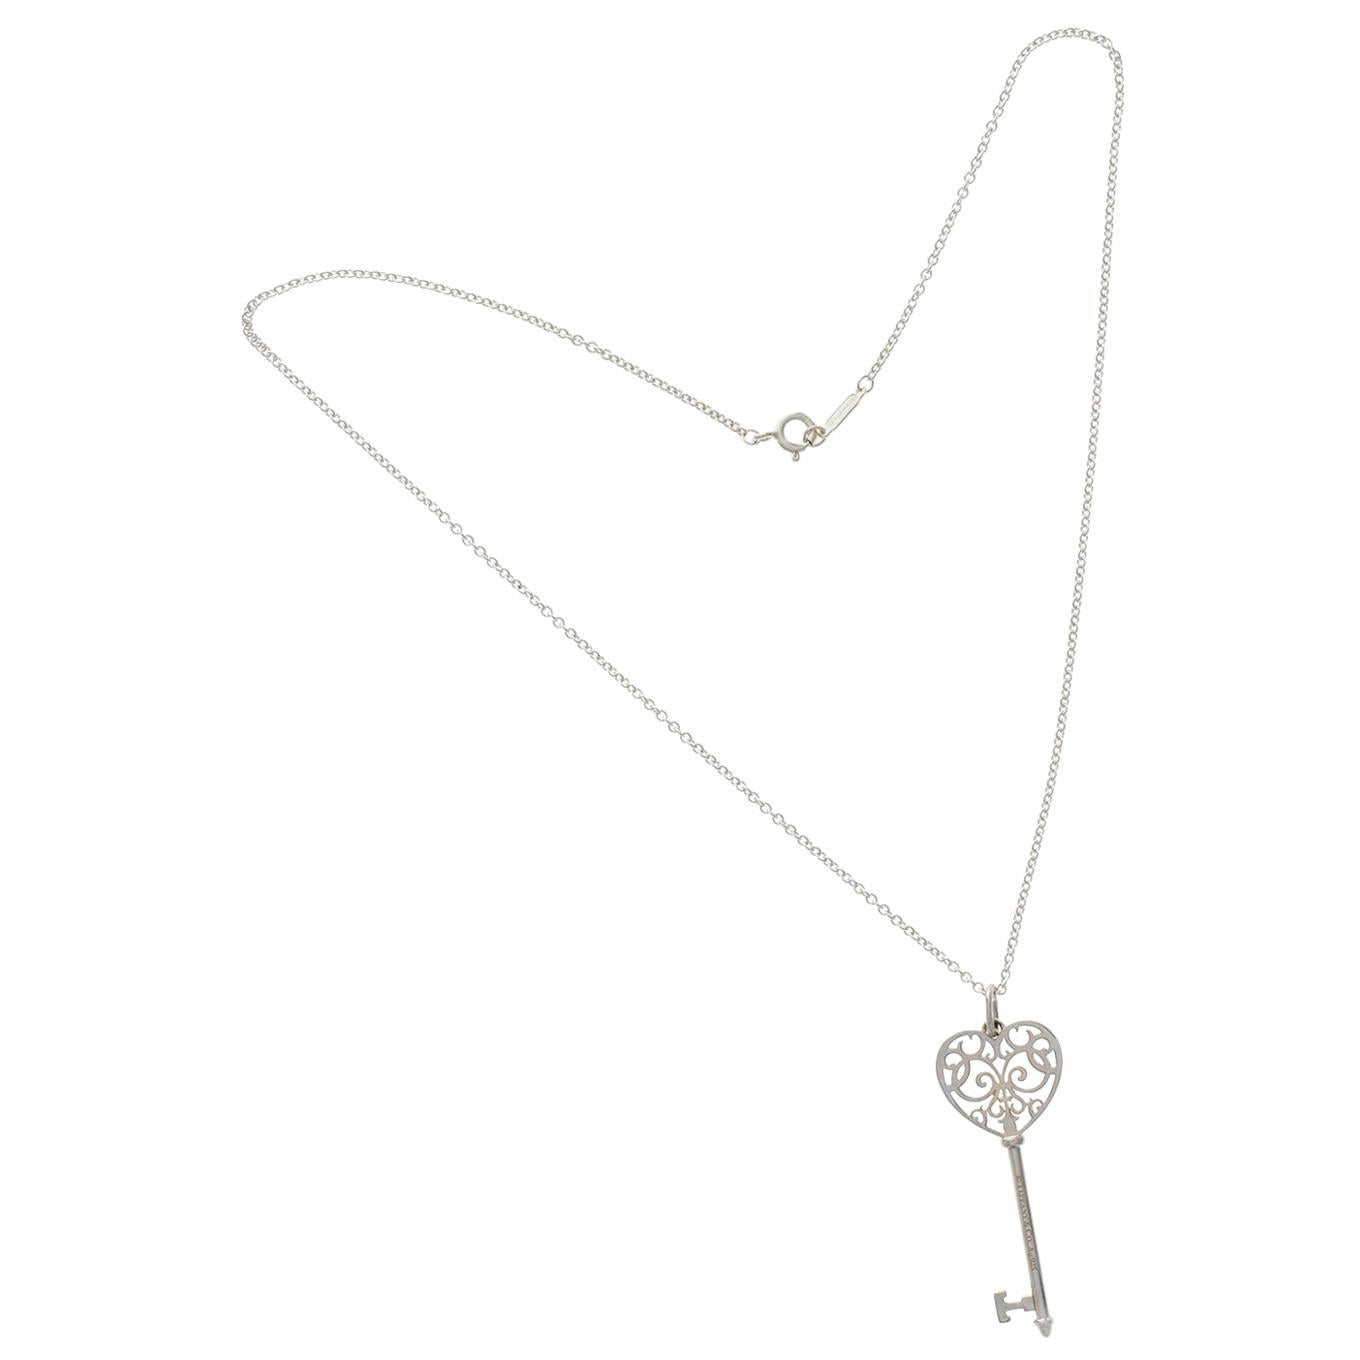 Tiny Heart Key Necklace - 925 Sterling Silver - Pendant Keys Love Gift Lock  NEW